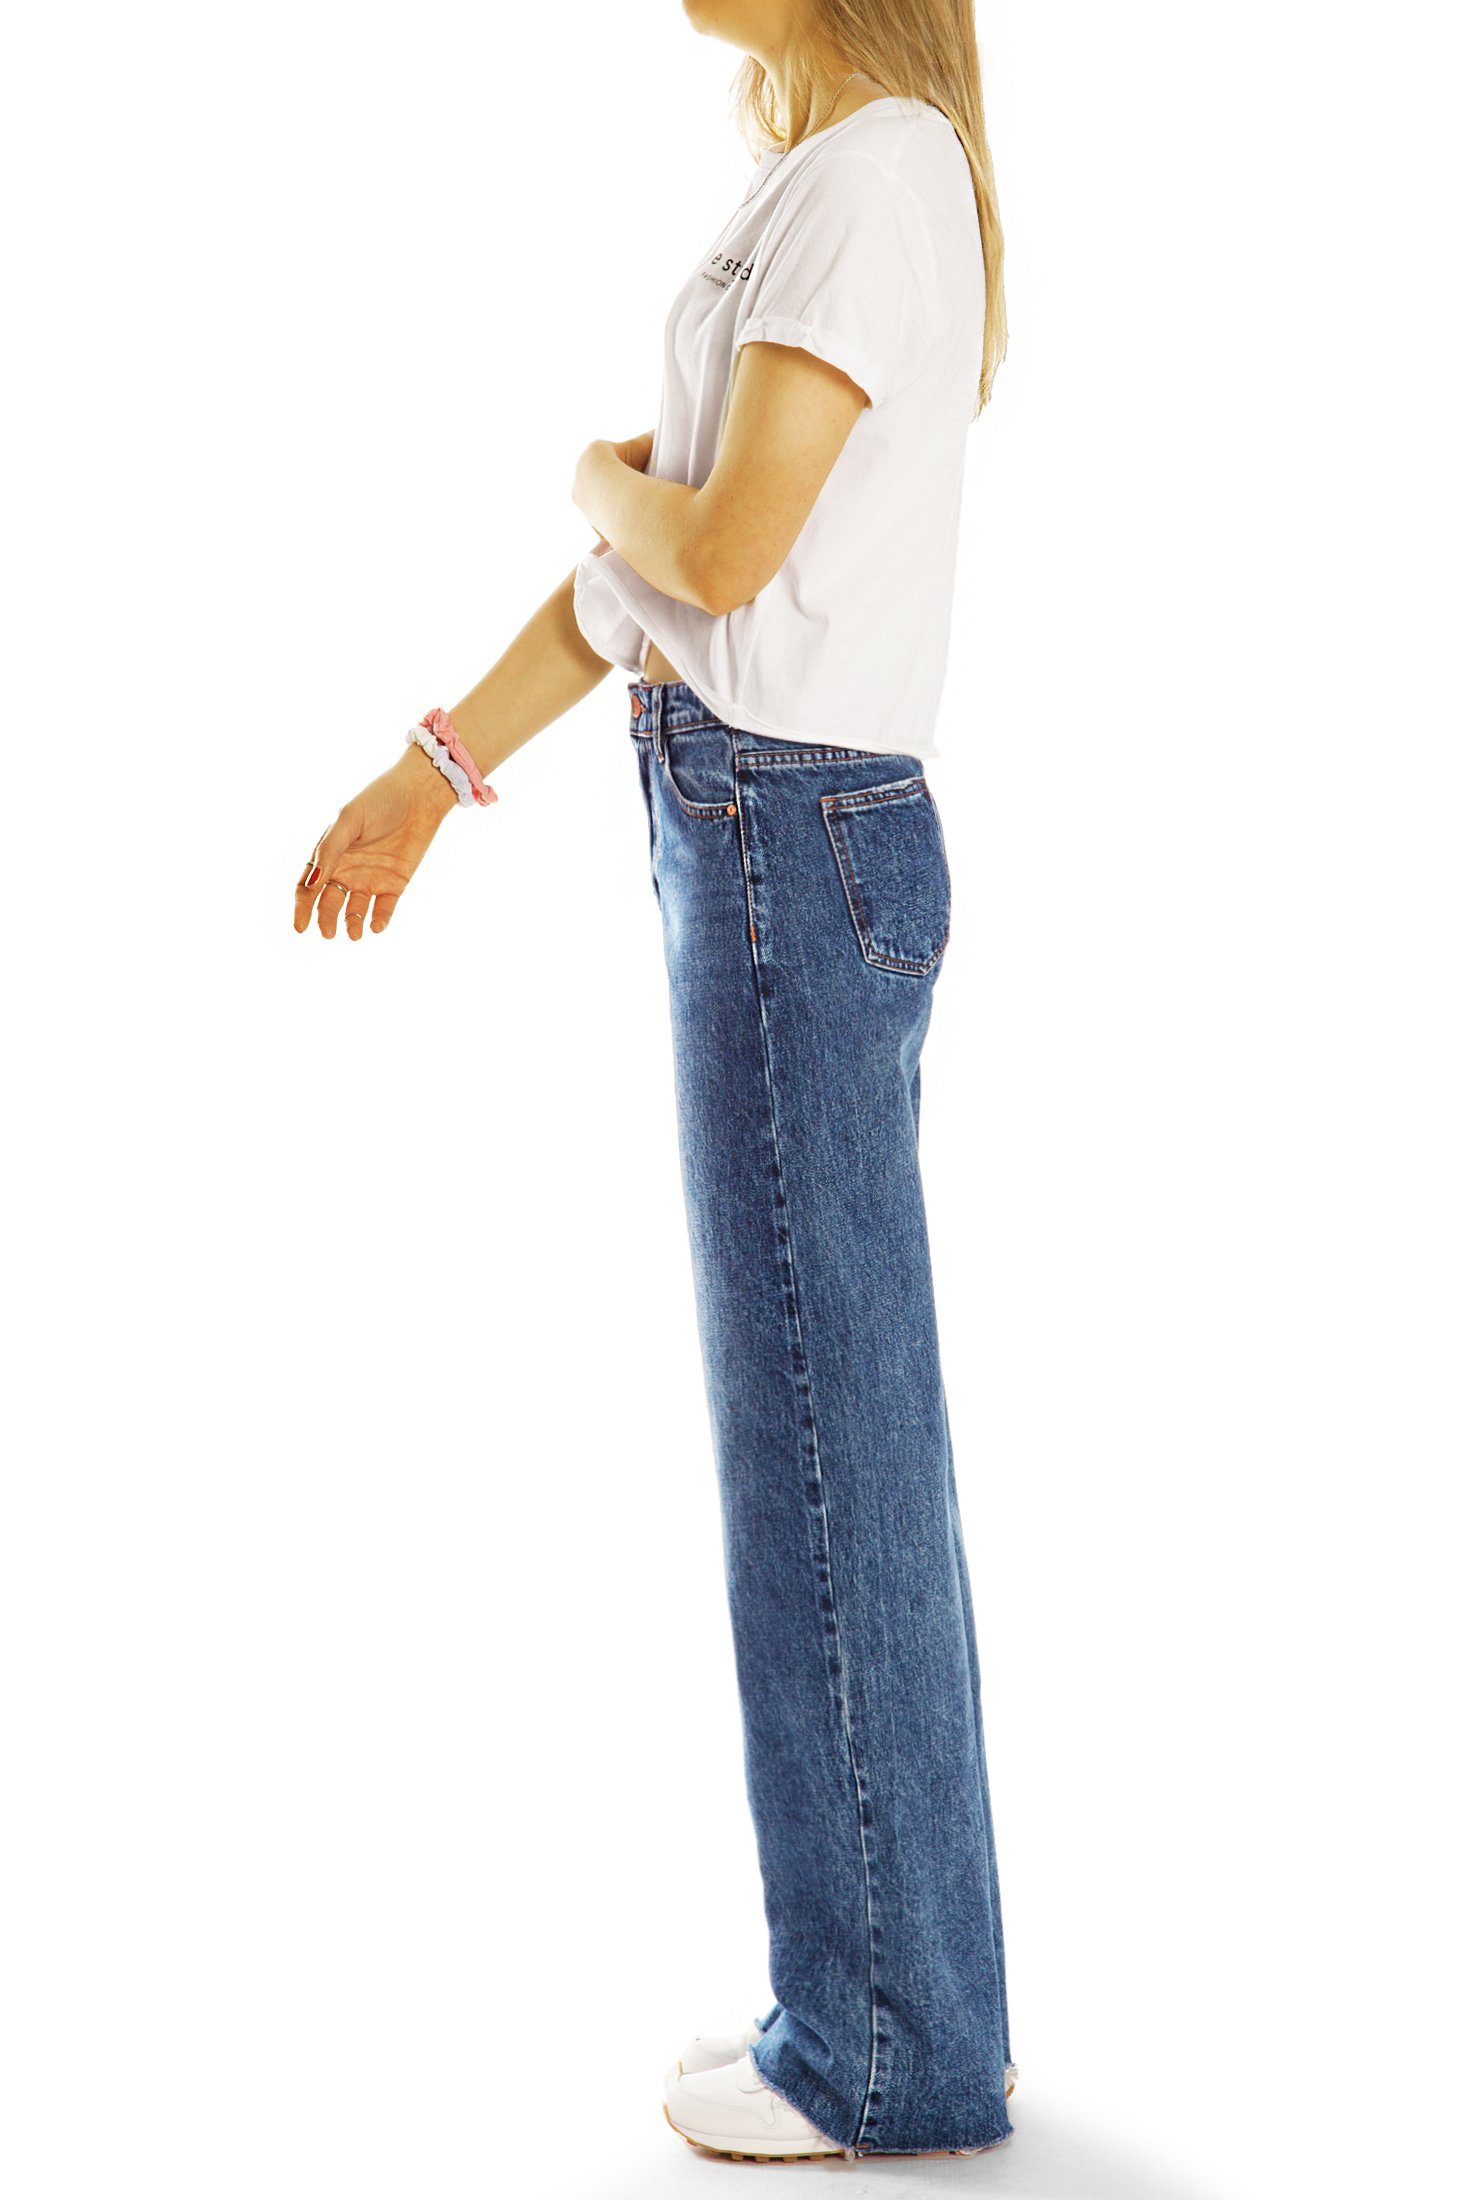 Jeans klassisch, slouchy modern Mom Jeans styled - High Damen Hose j27g-3 - be Waist 5-Pocket-Style - Slouchy